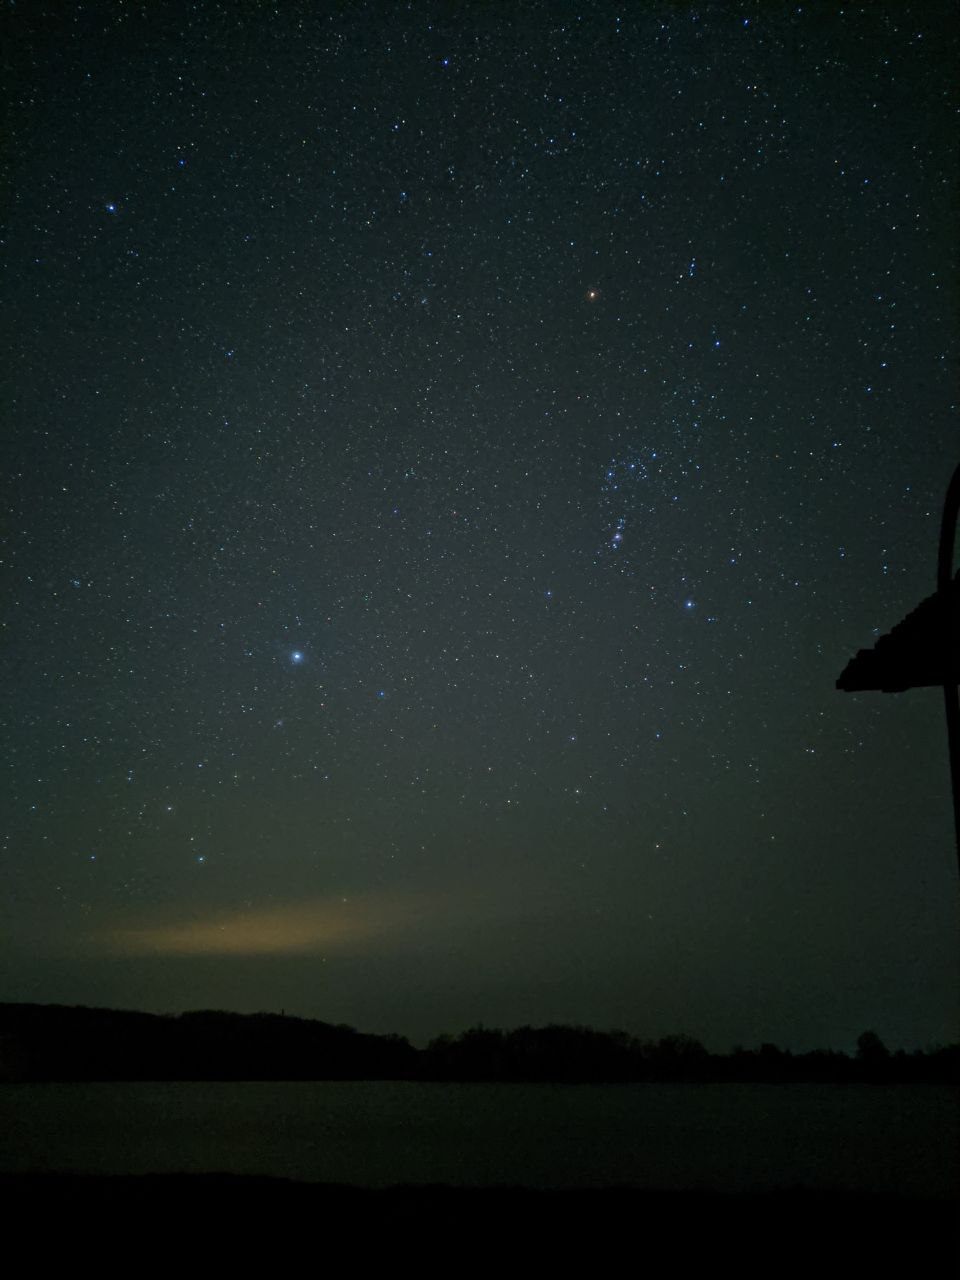 a starry night sky over a field